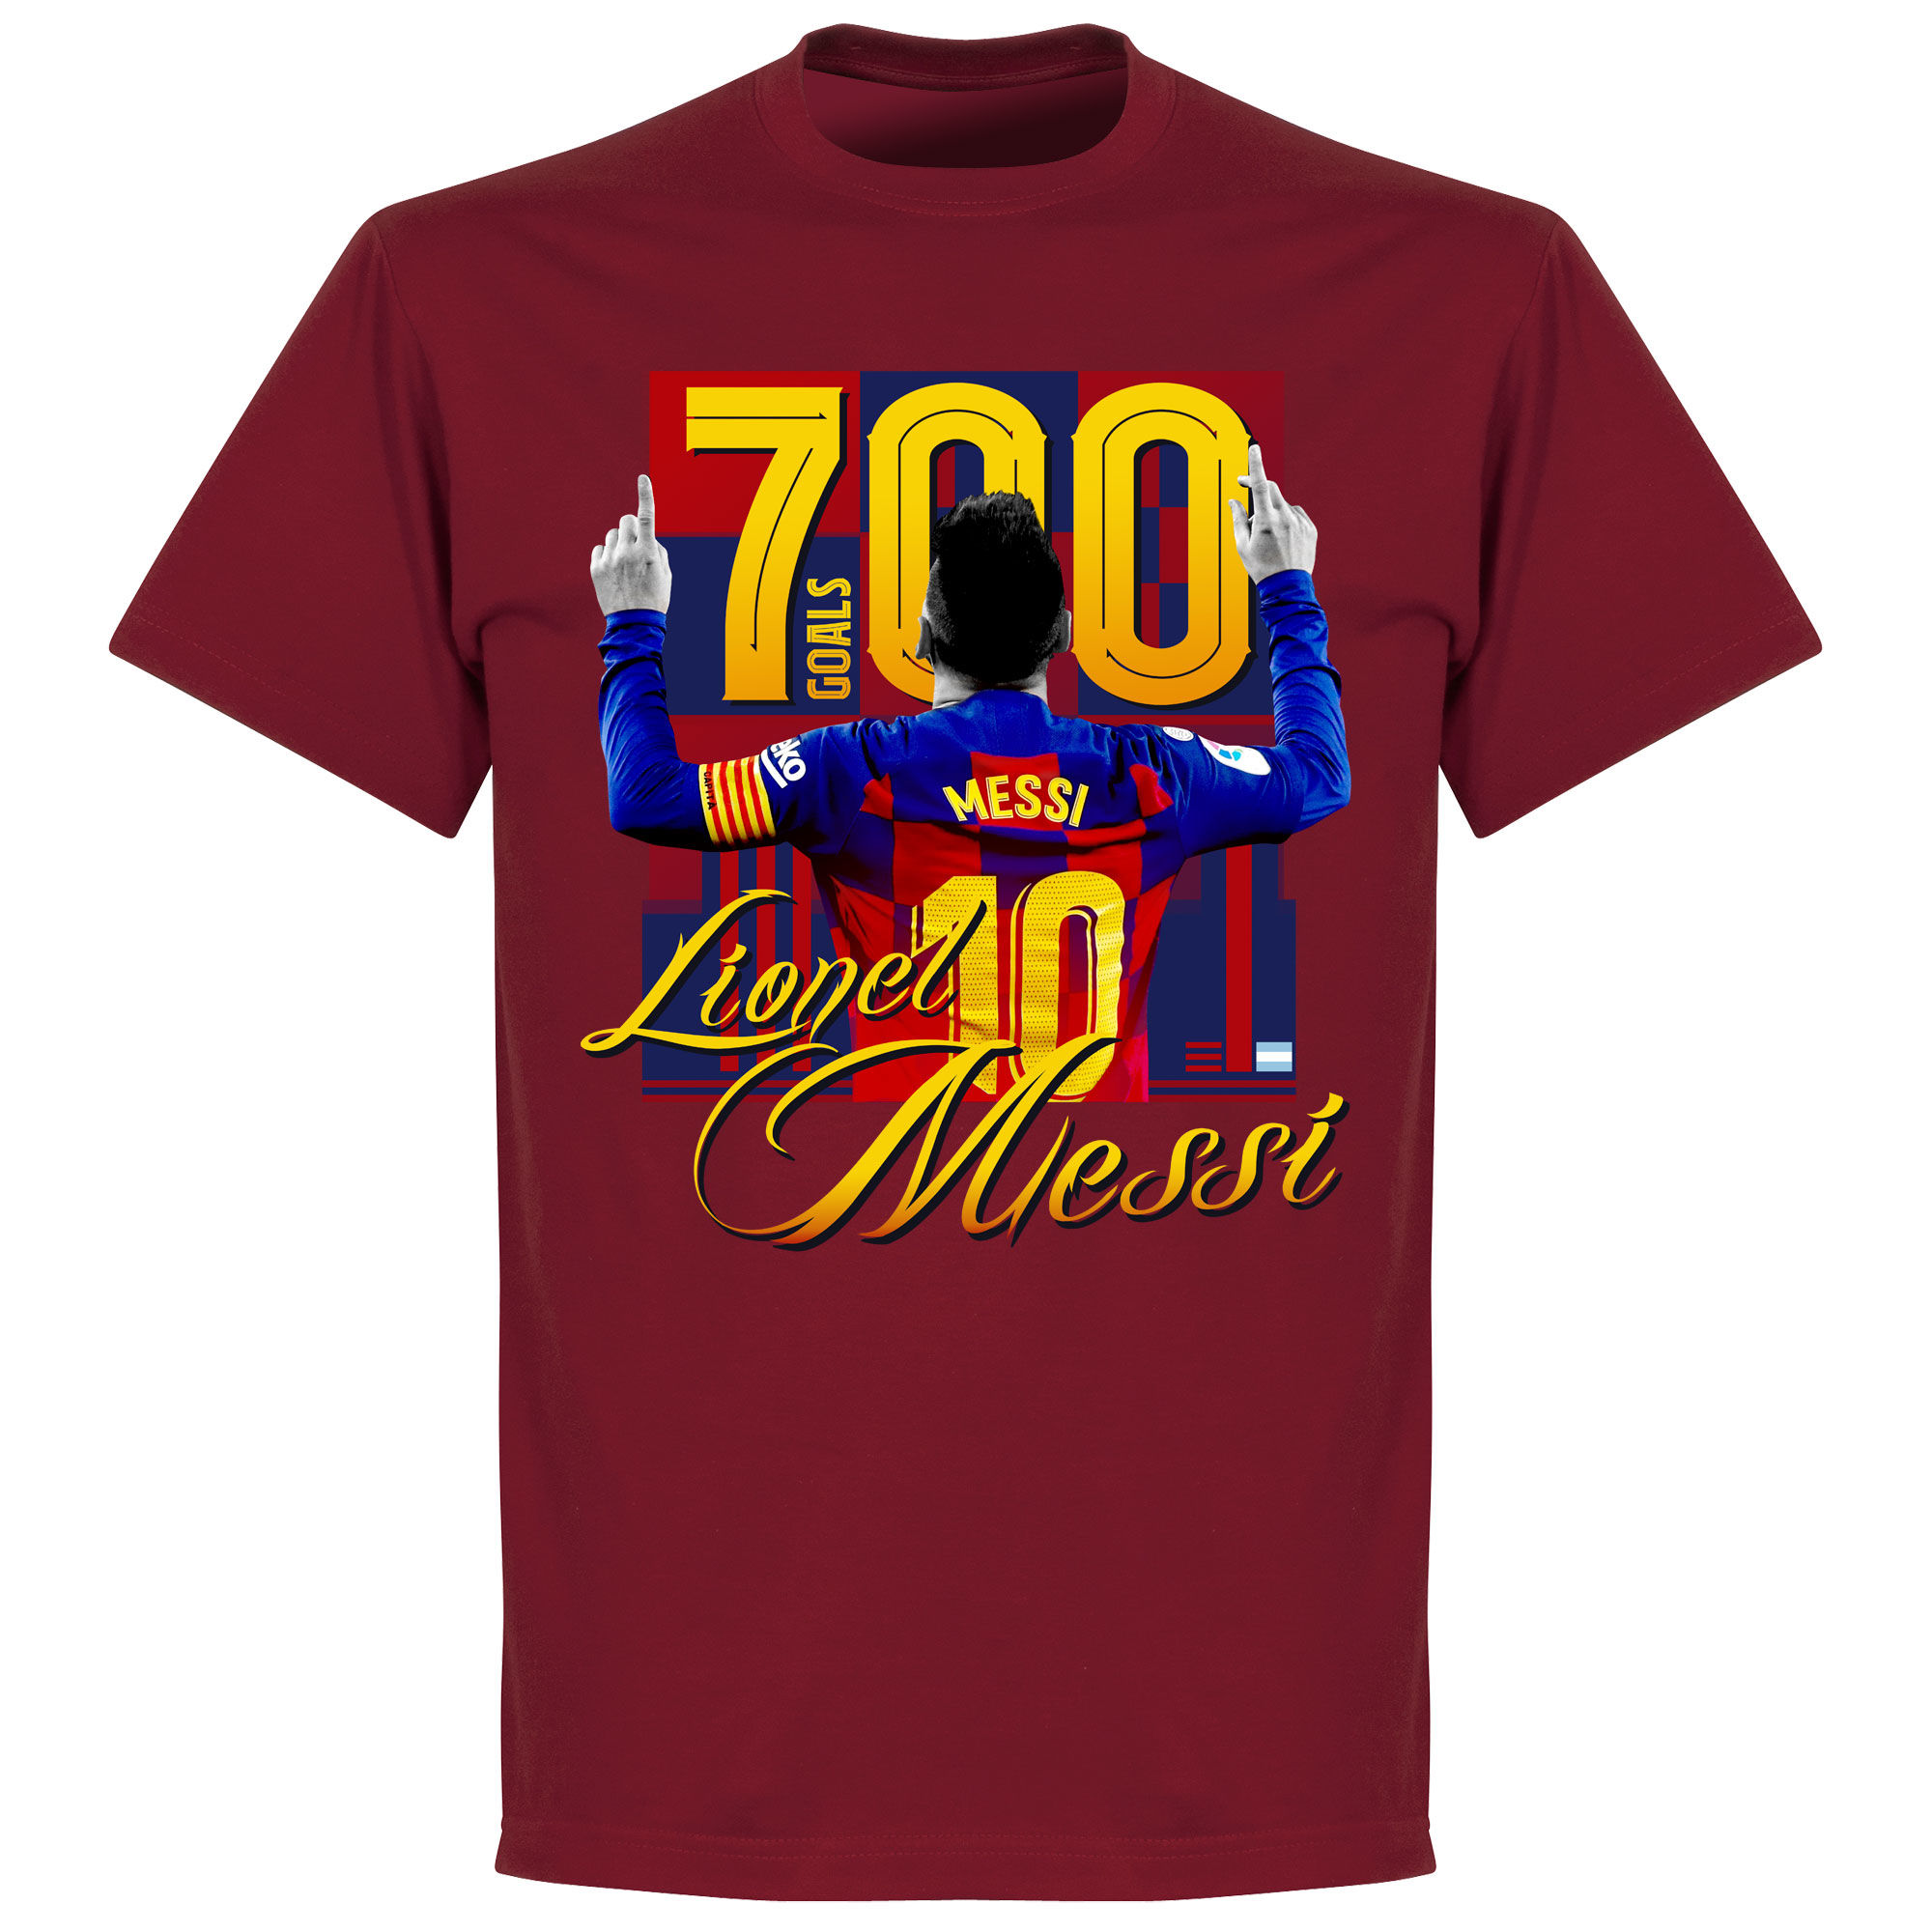 Barcelona - Tričko "700 Goals" - červené, Lionel Messi